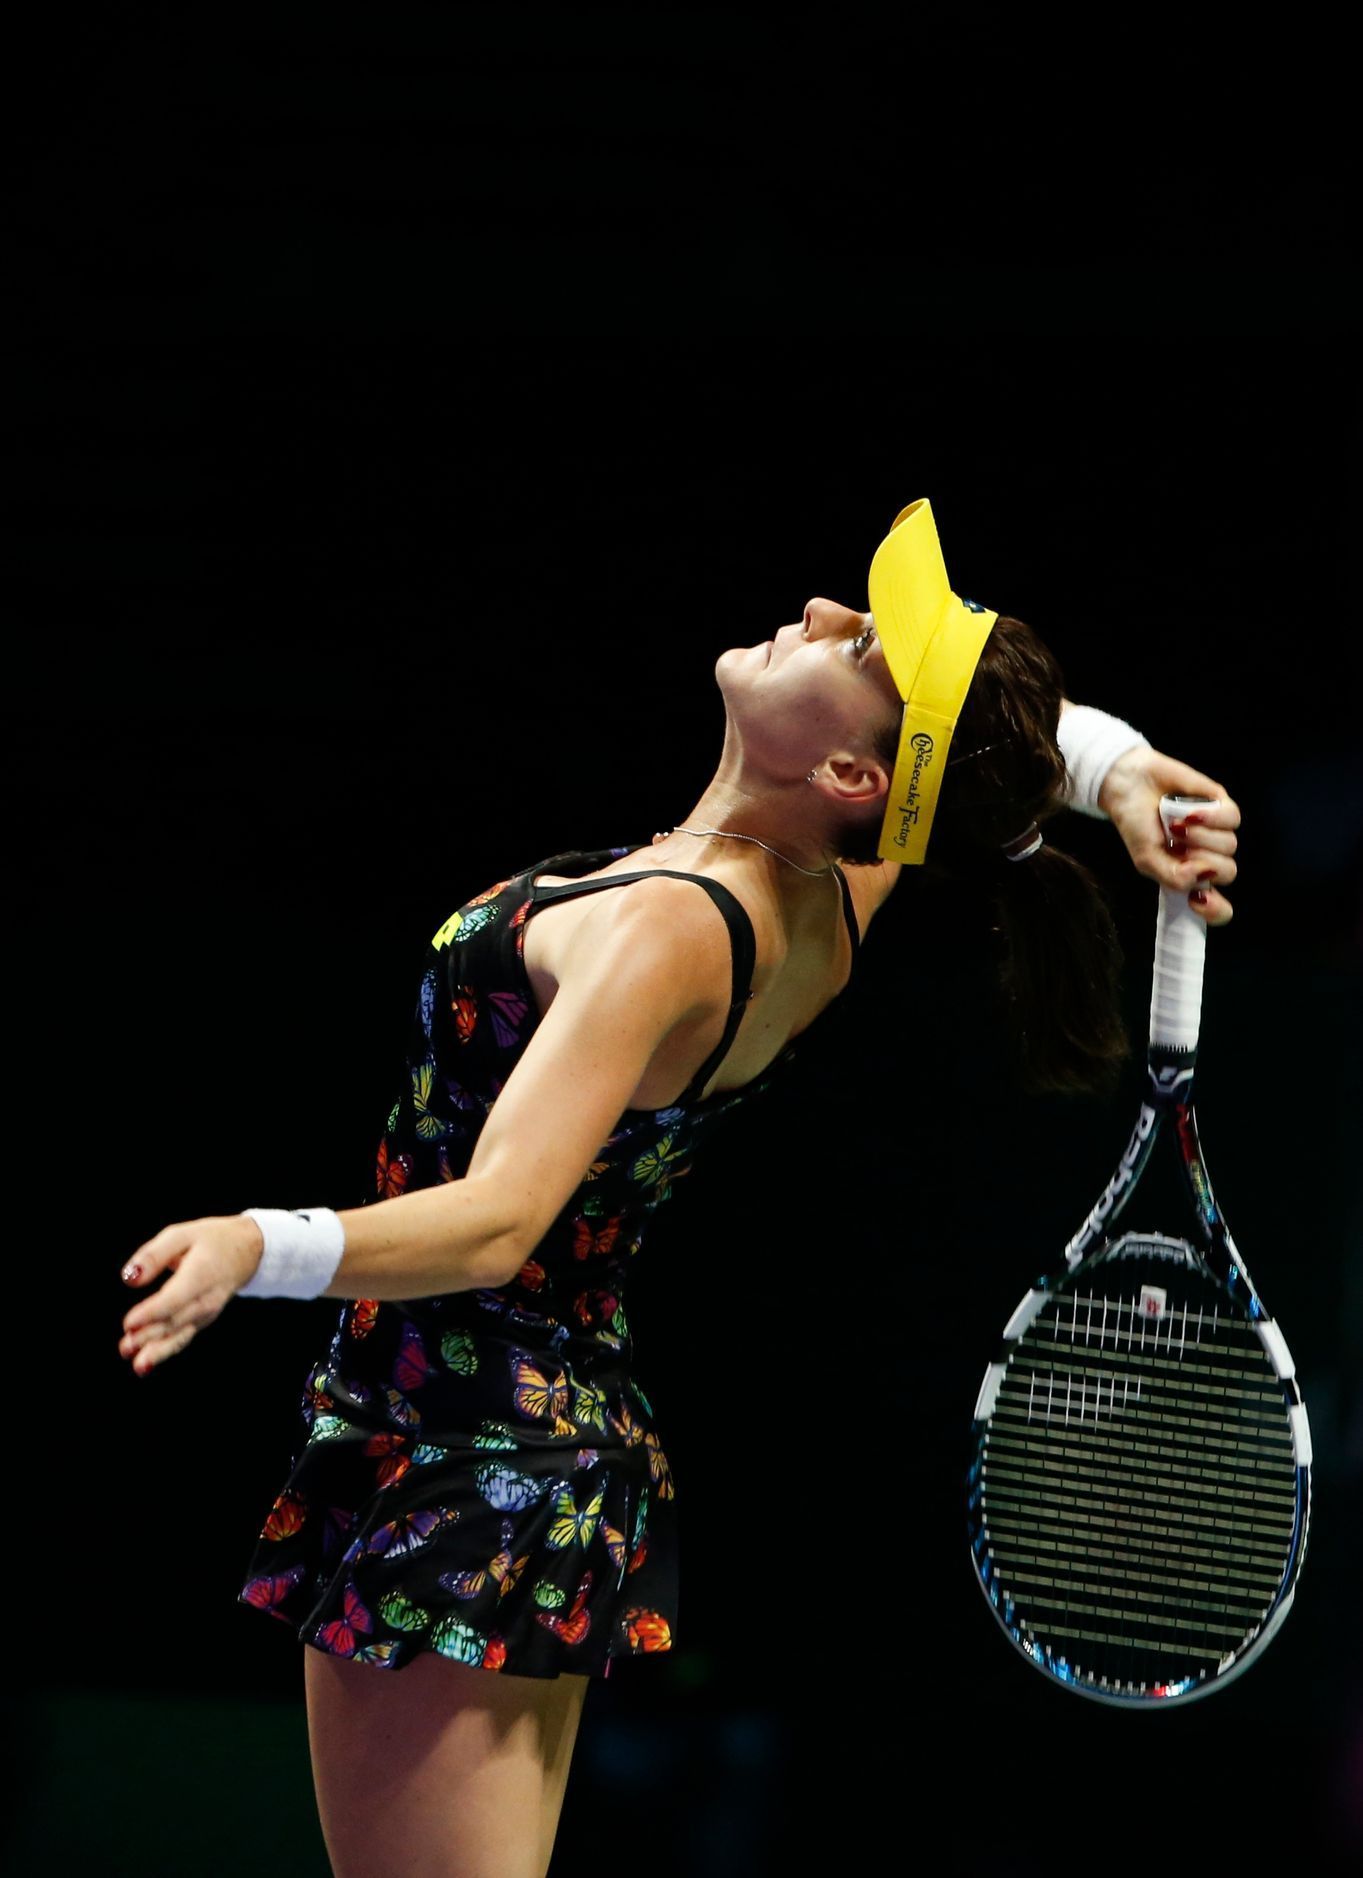 Radwanska of Poland serves against Kvitova of the Czech Republic during their WTA Finals singles tennis match at the Singapore Indoor Stadium